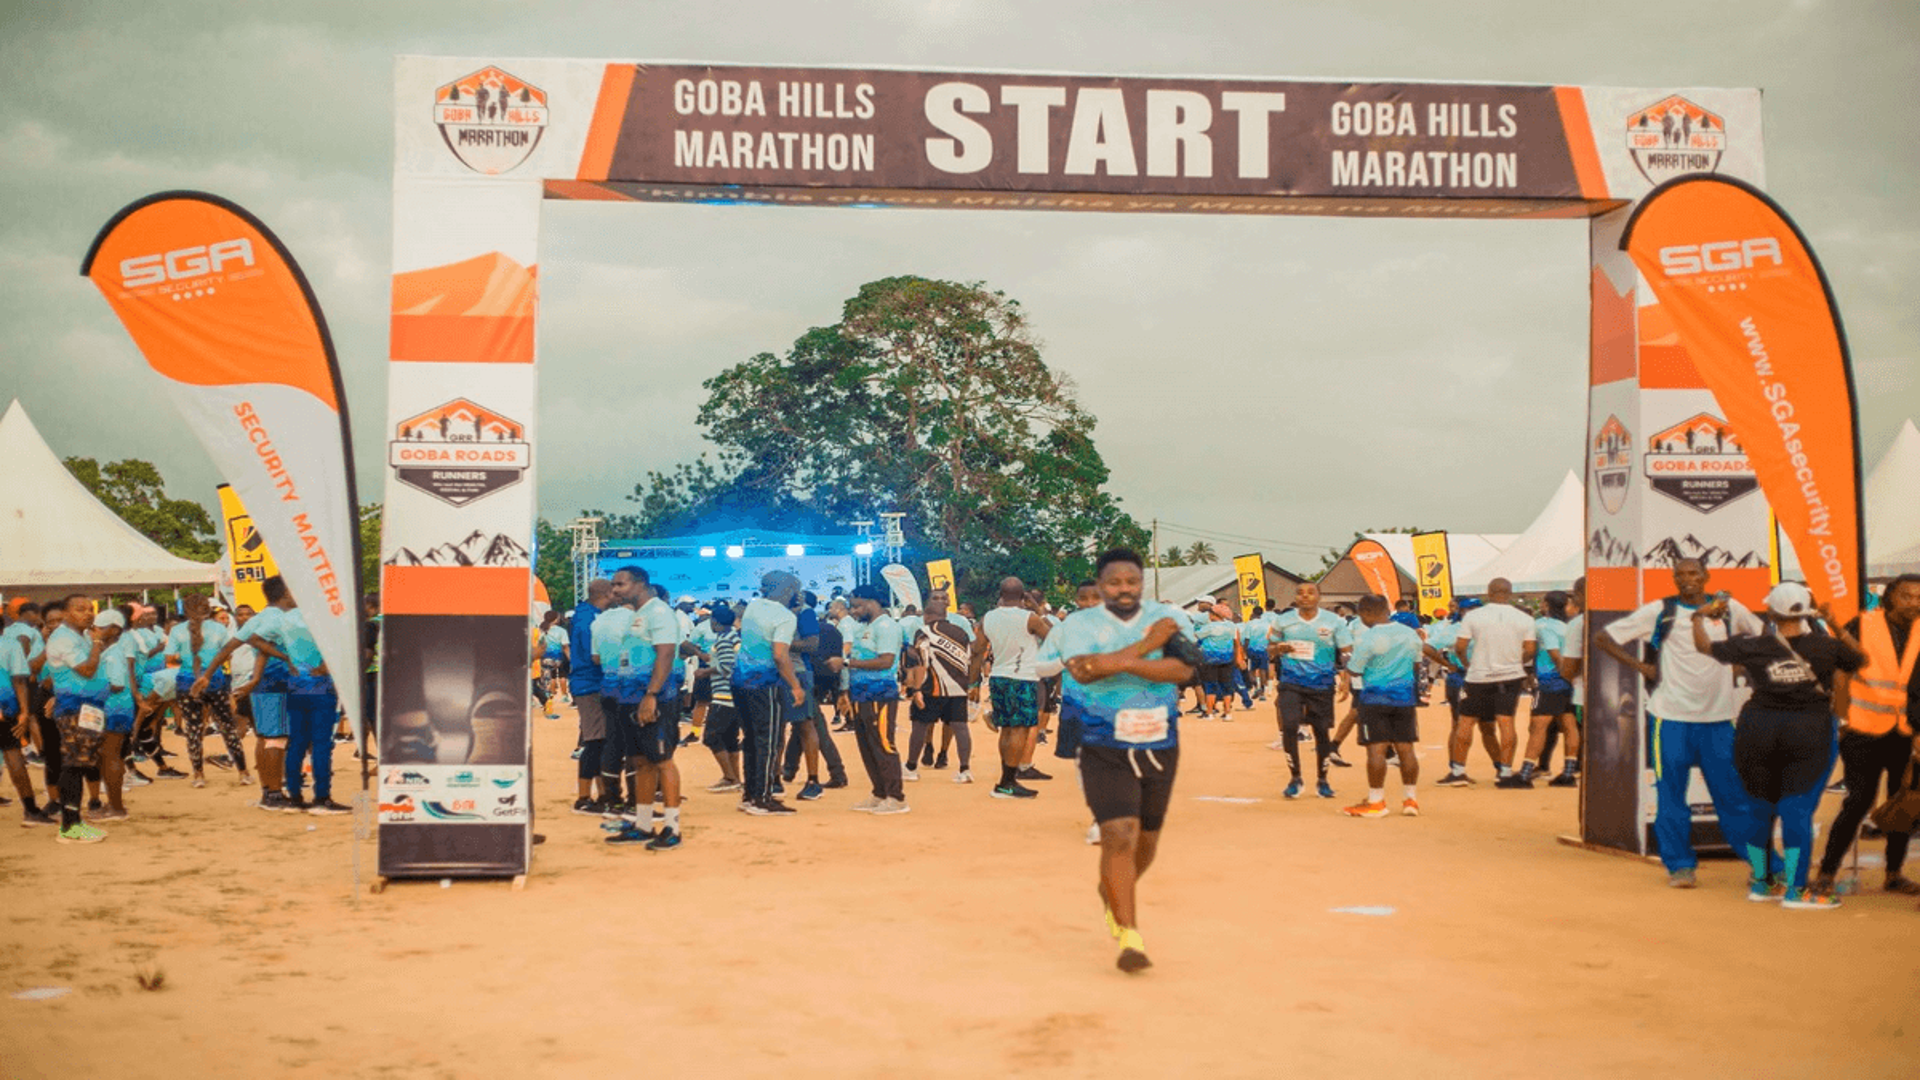 Goba hills marathon starting point